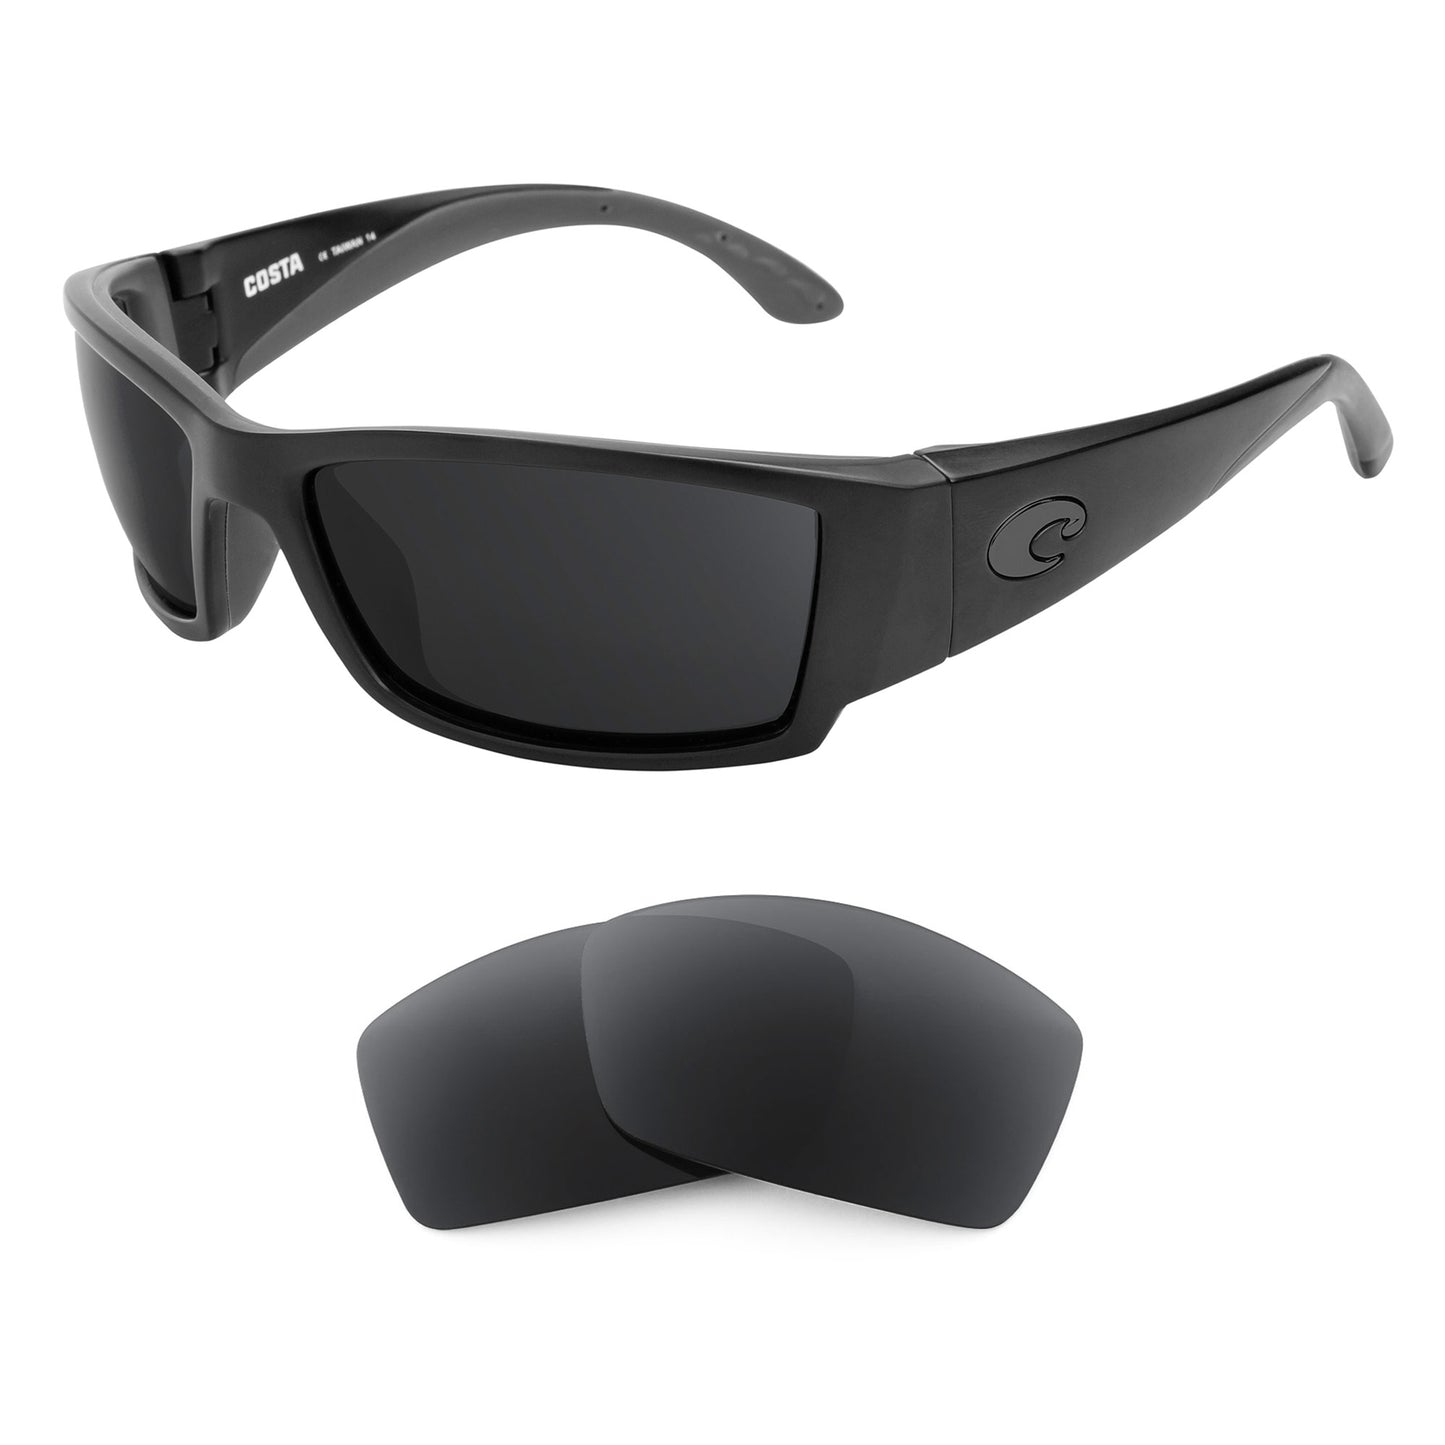 Costa Corbina sunglasses with replacement lenses